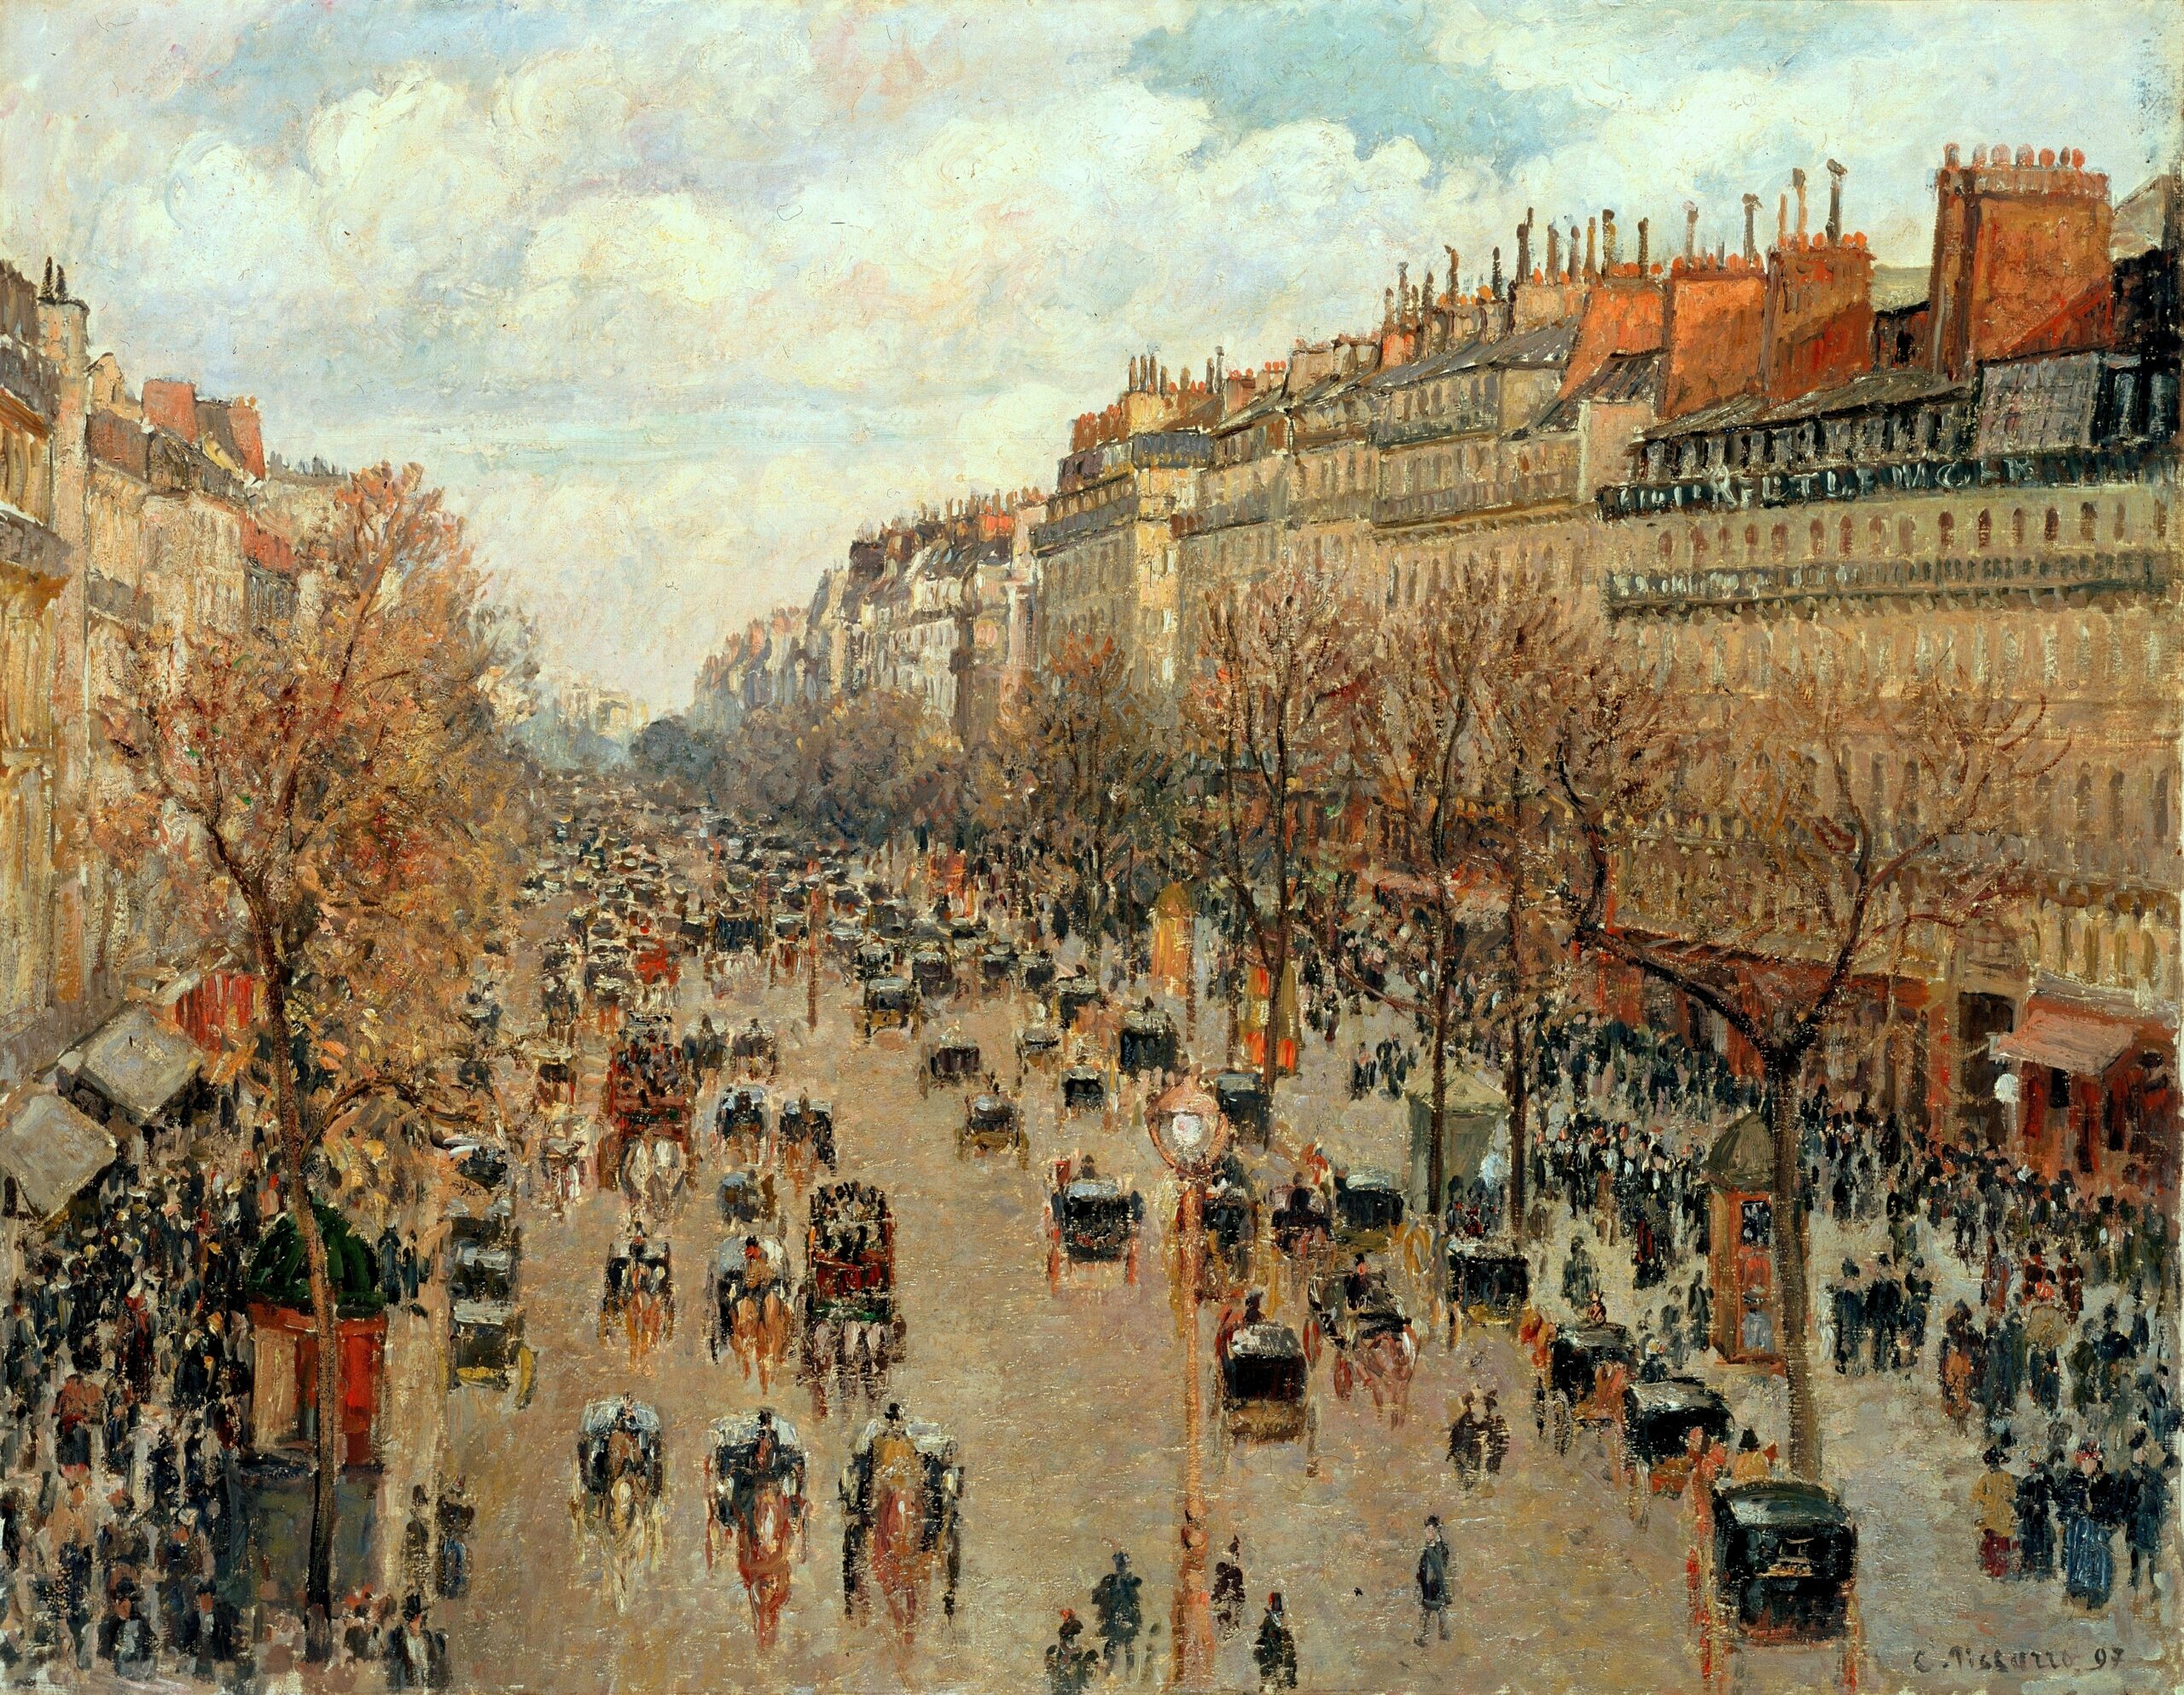 Boulevard Montmartre, Paris - Camille Pissarro